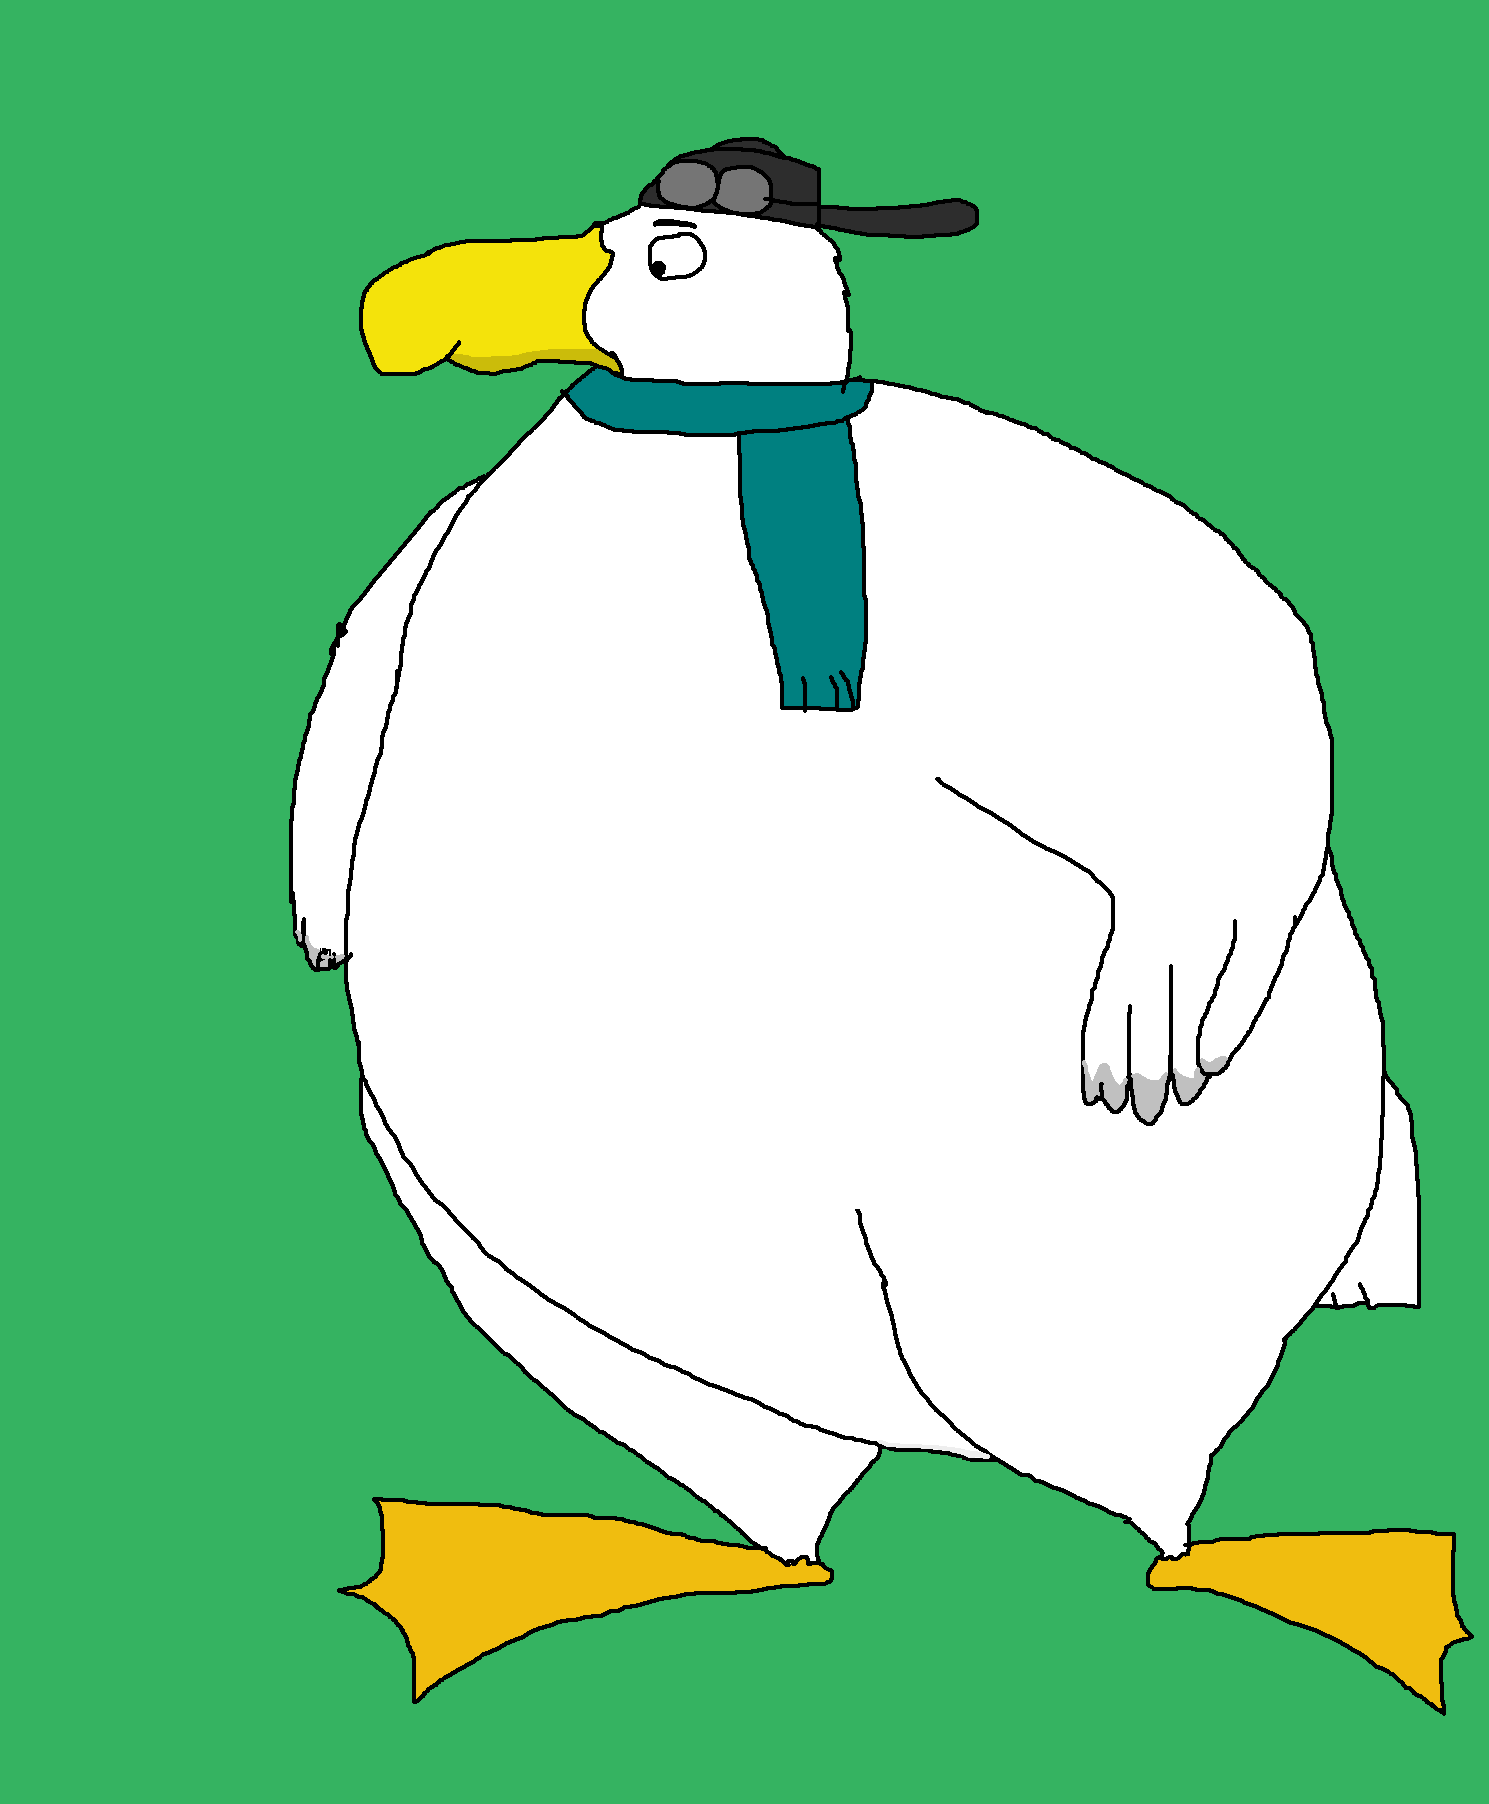 Wilbur the Albatross by Kody